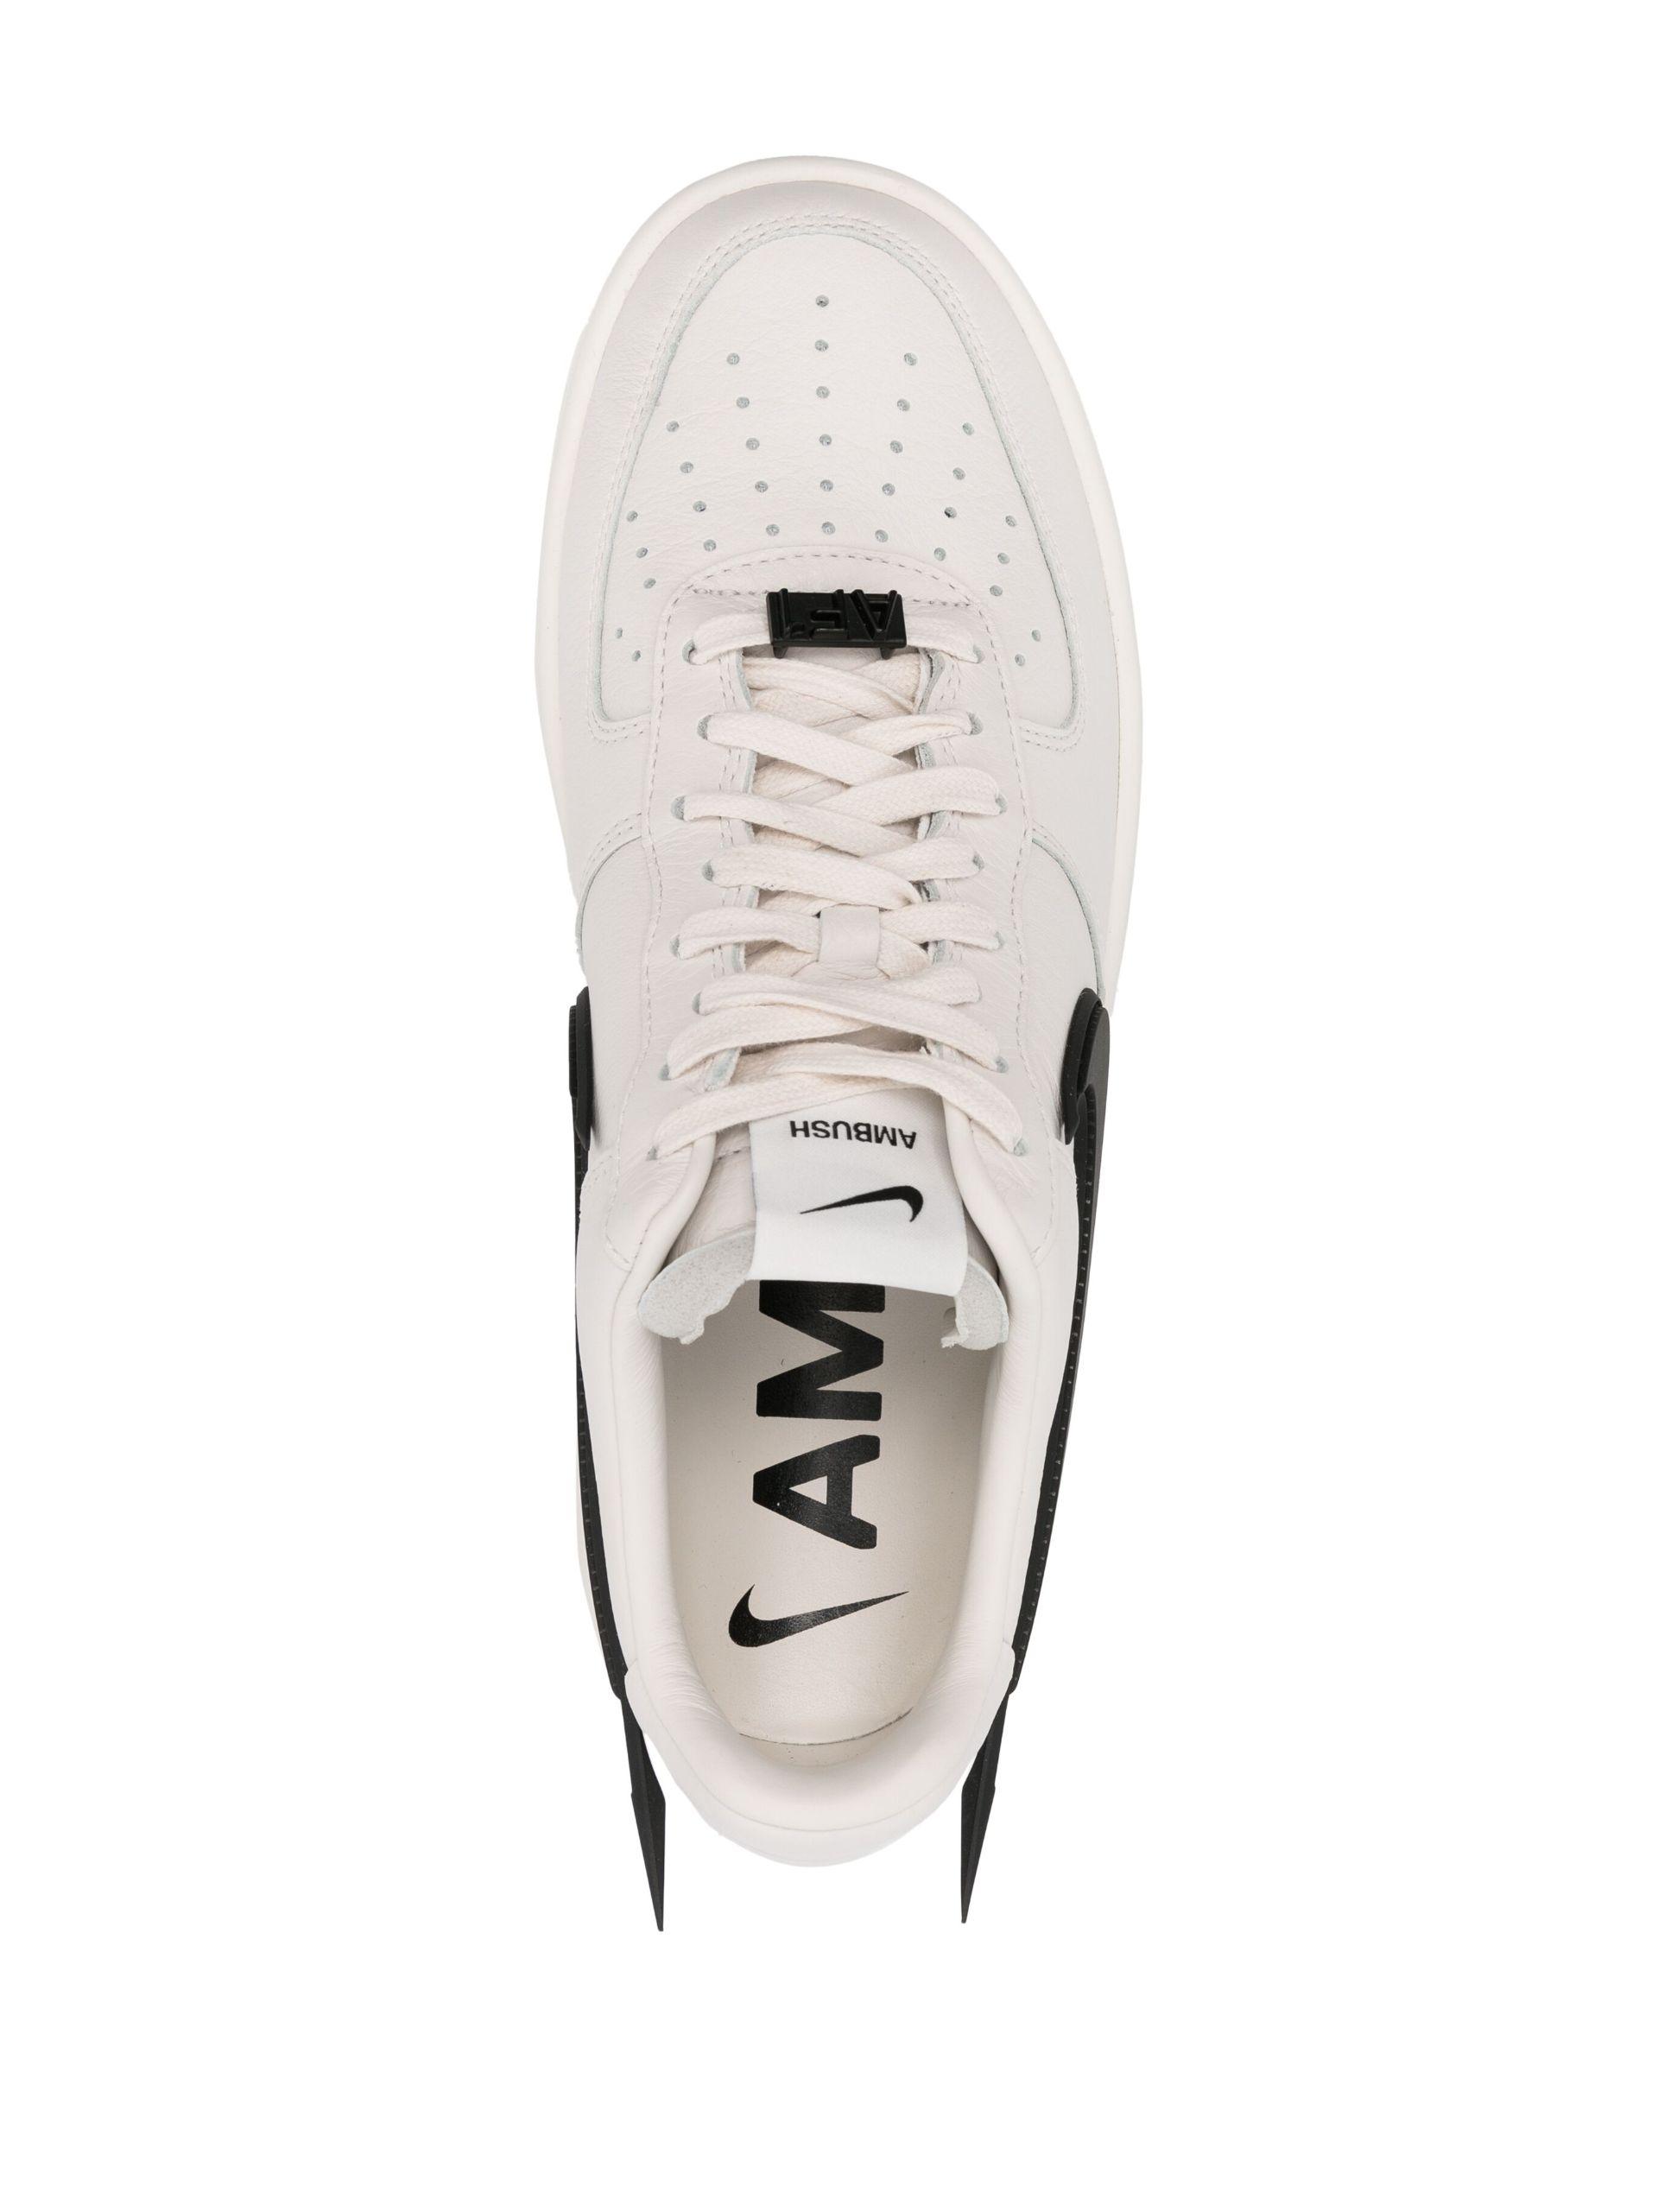 Nike X Ambush White Air Force 1 Sneakers   Women's   Calf Leather